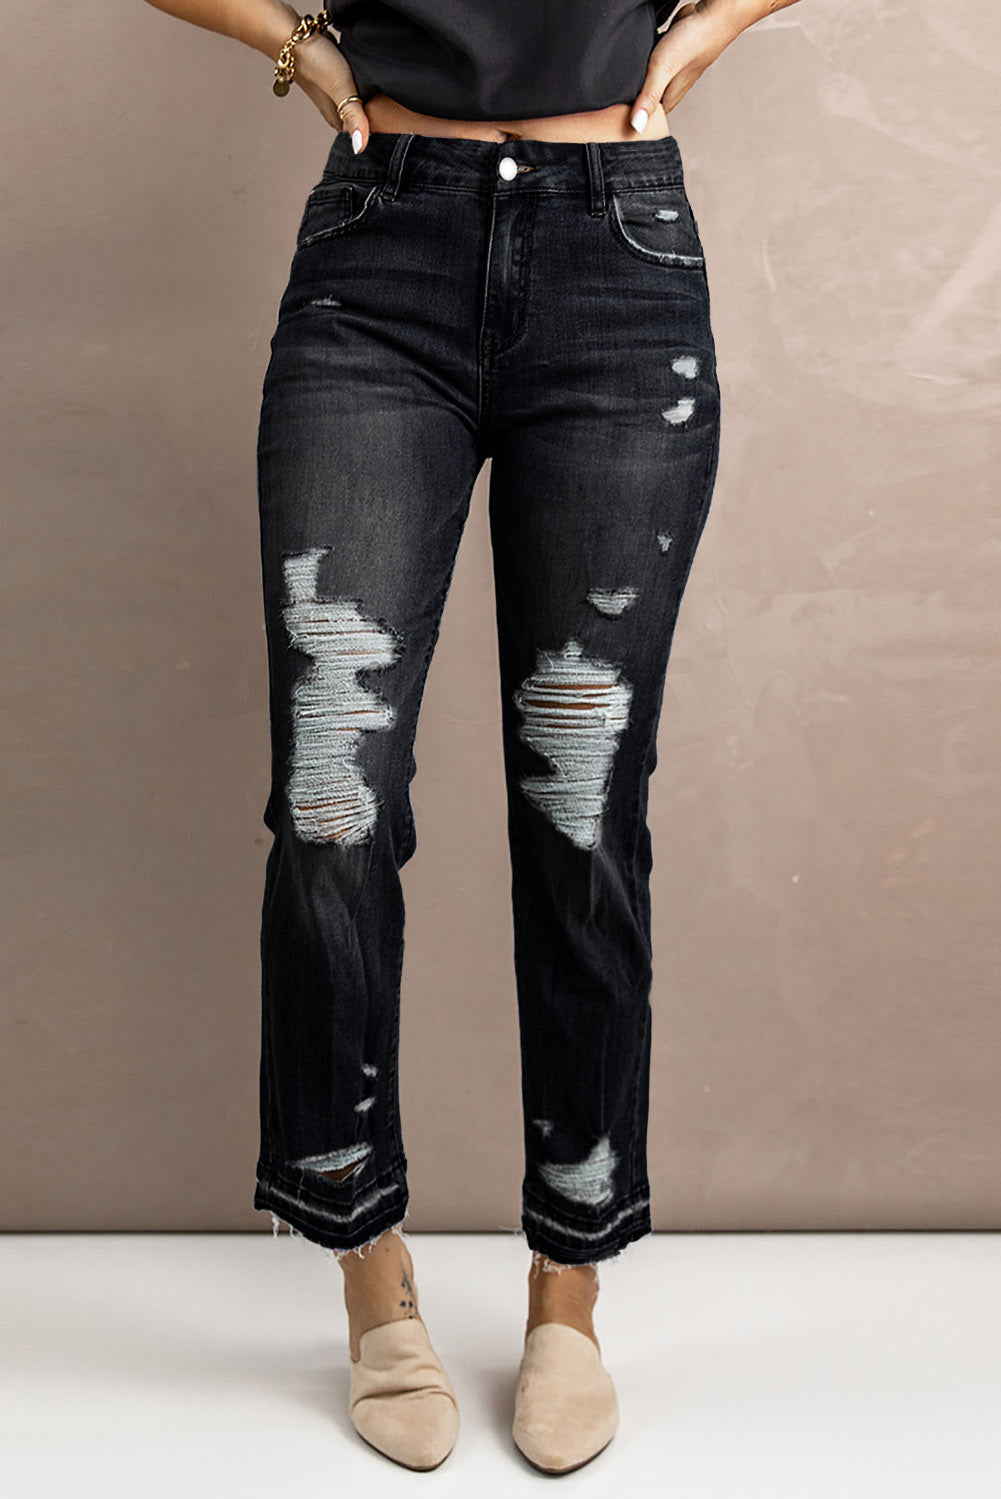 Black Washed Straight Leg Distressed High Waist Jeans Jeans JT's Designer Fashion